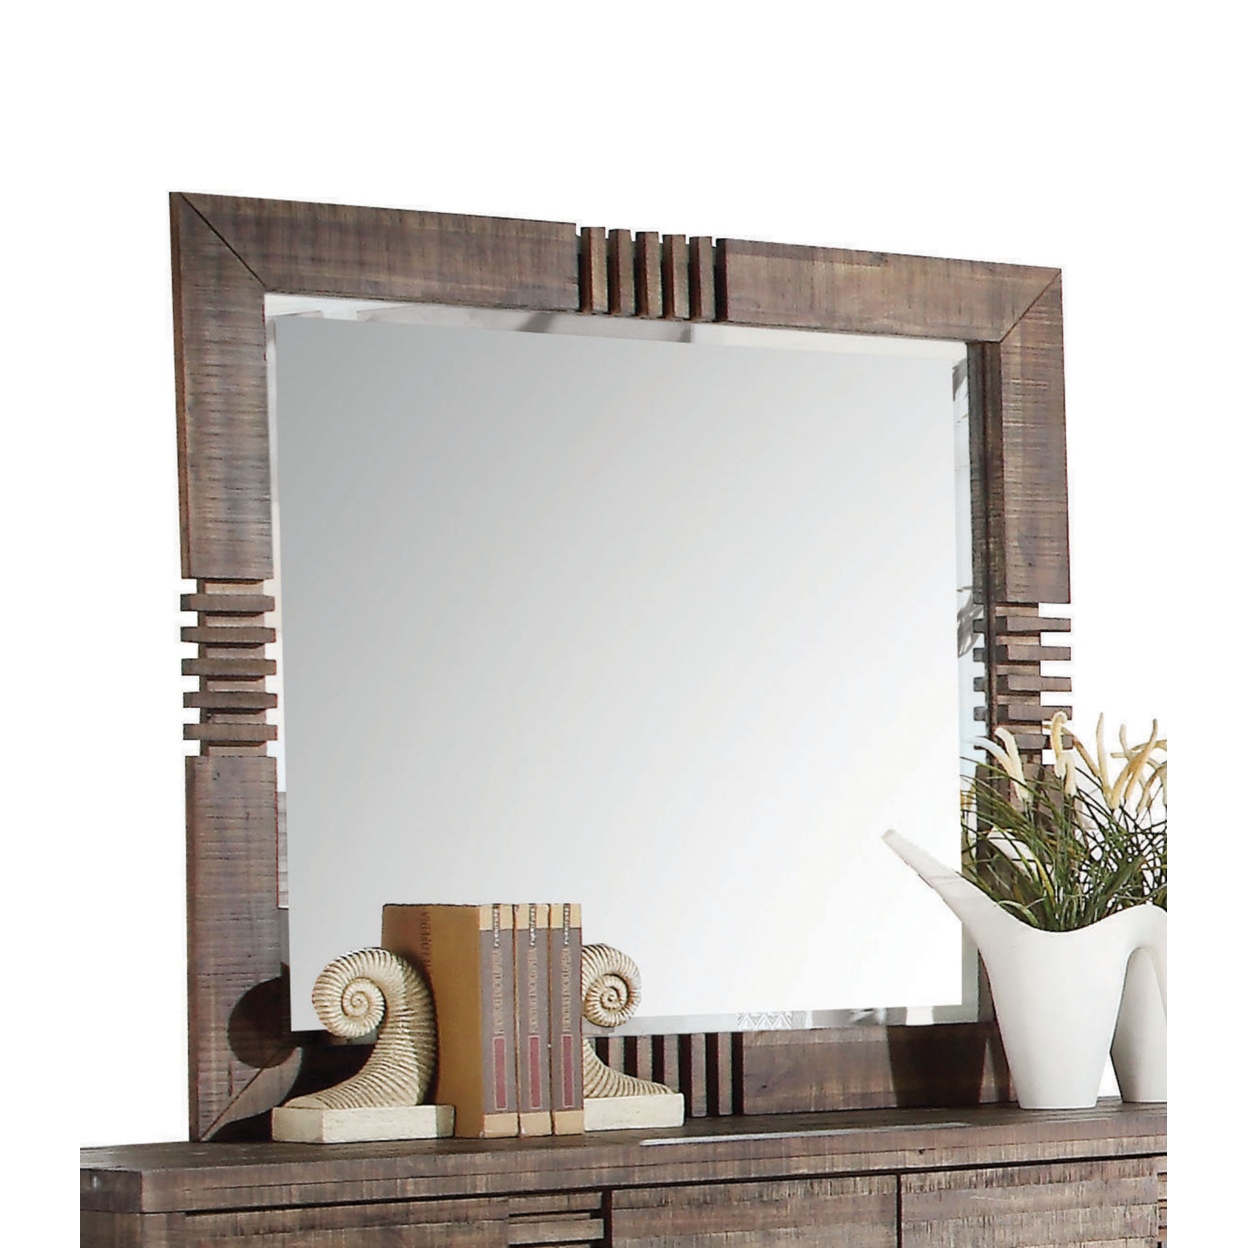 Rectangular Wooden Frame Mirror With Slat Pattern, Brown And Silver- Saltoro Sherpi